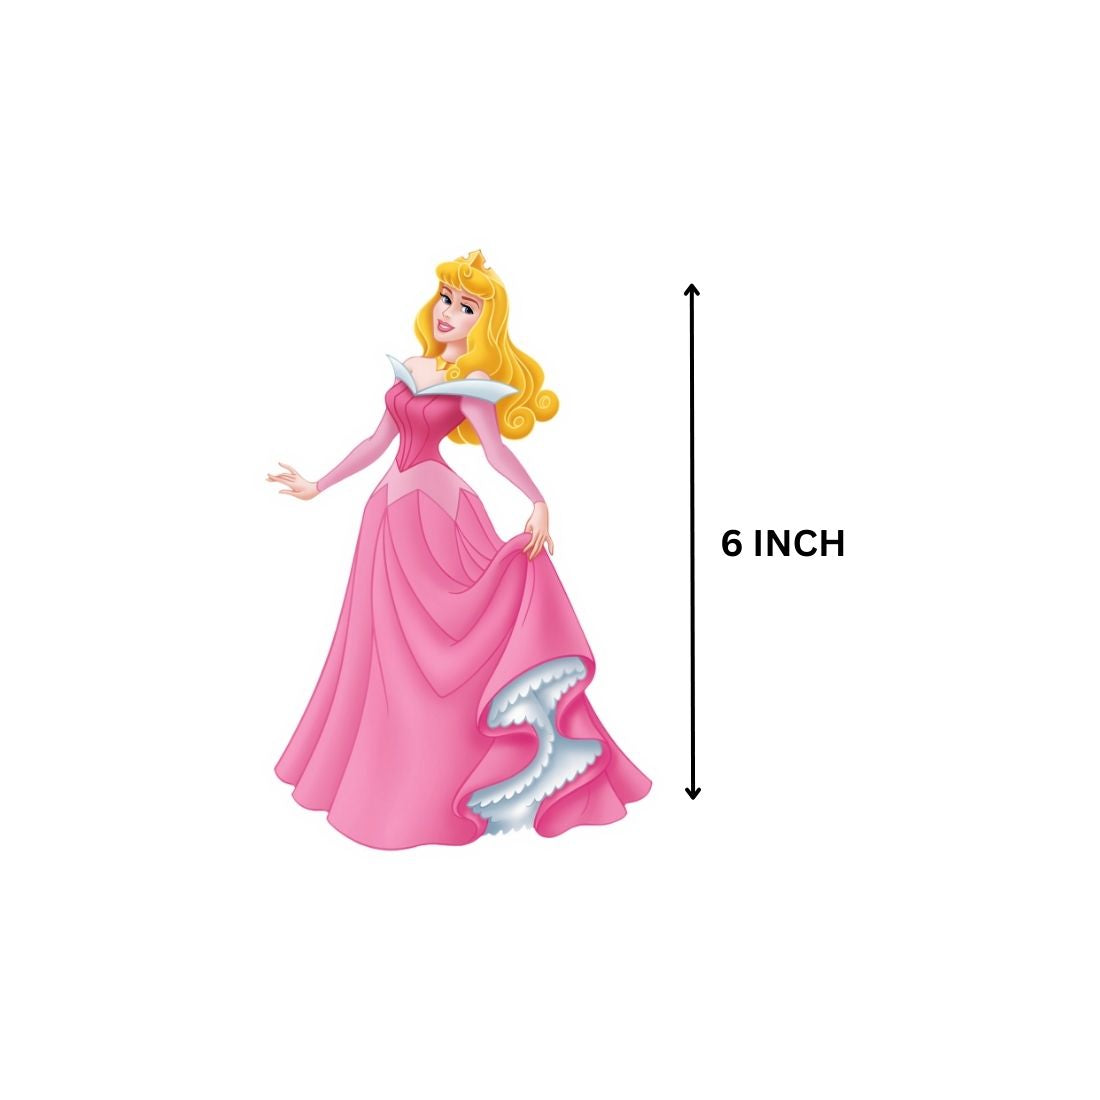 Disney Princess Theme Cutout (6 inches/250 GSM Cardstock/Mixcolour/12Pcs)